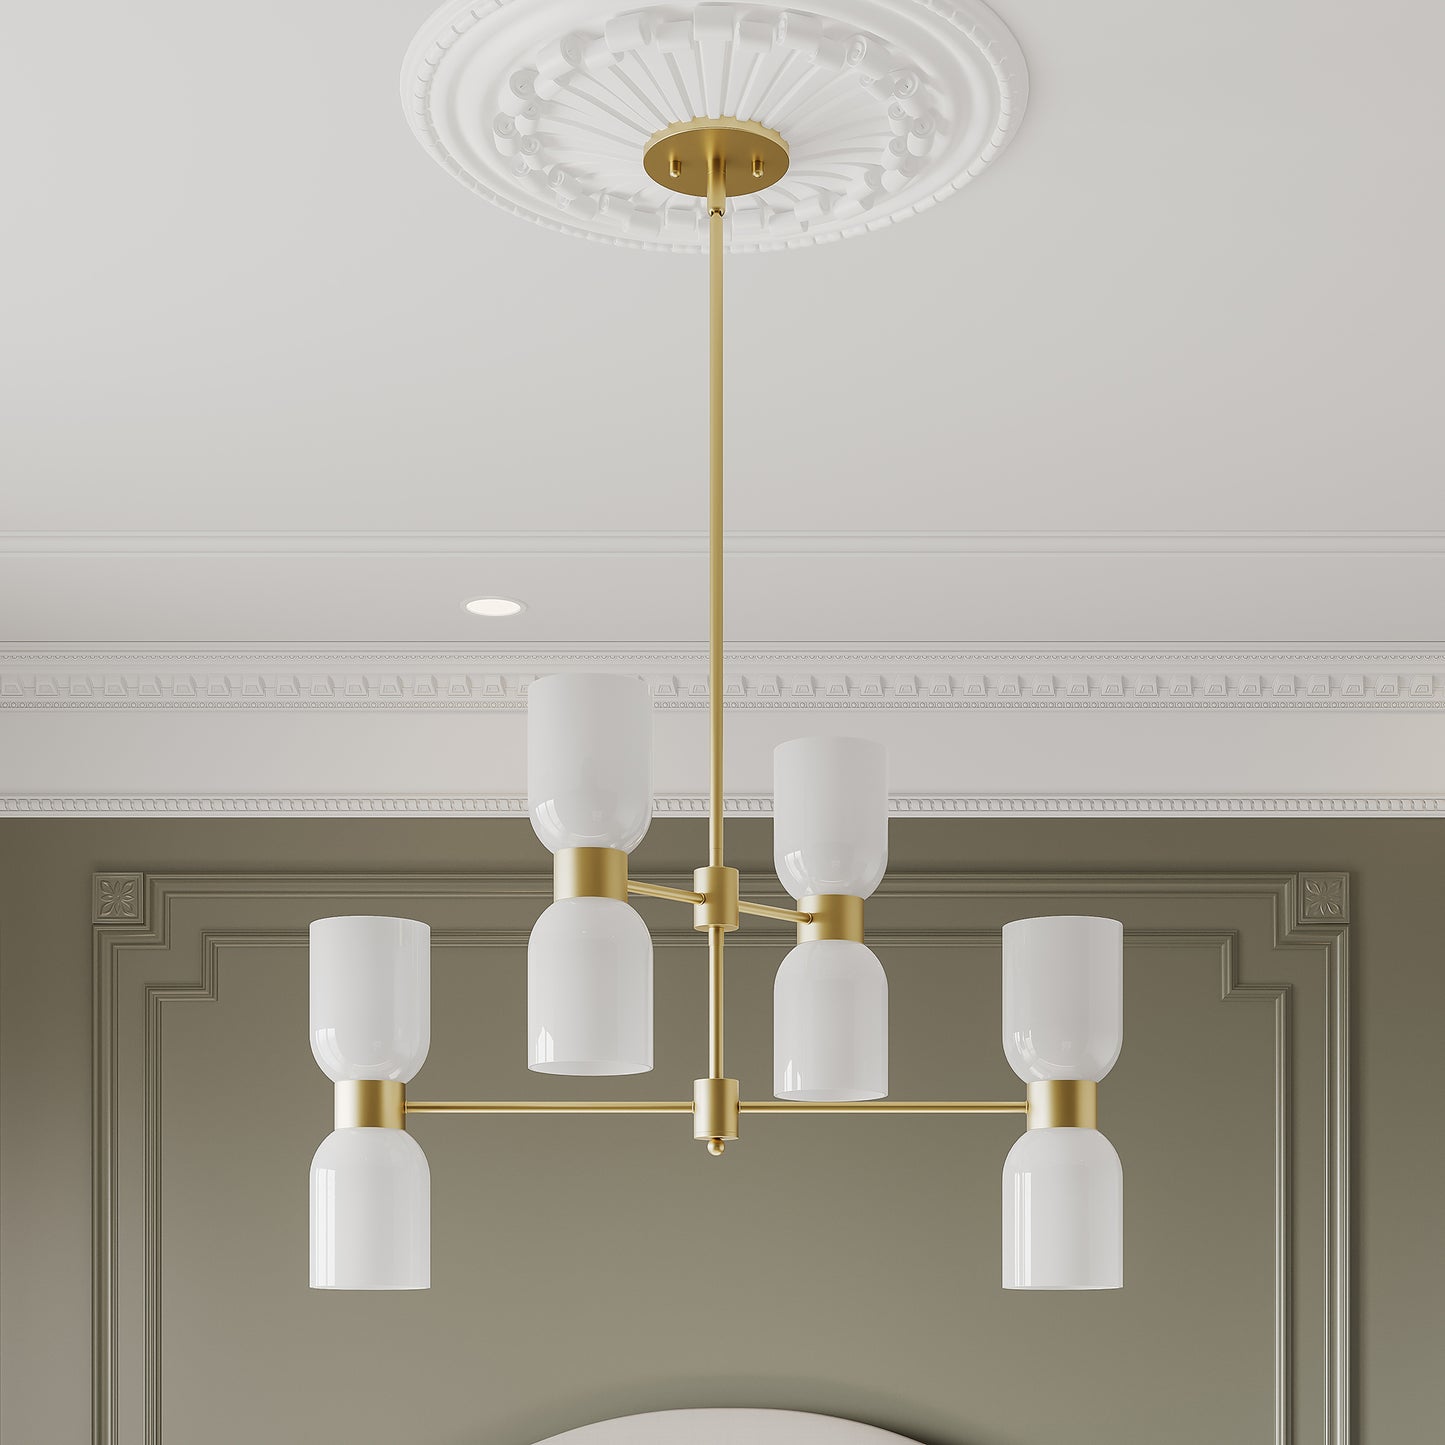 8 light modern linear chandelier (3) by ACROMA